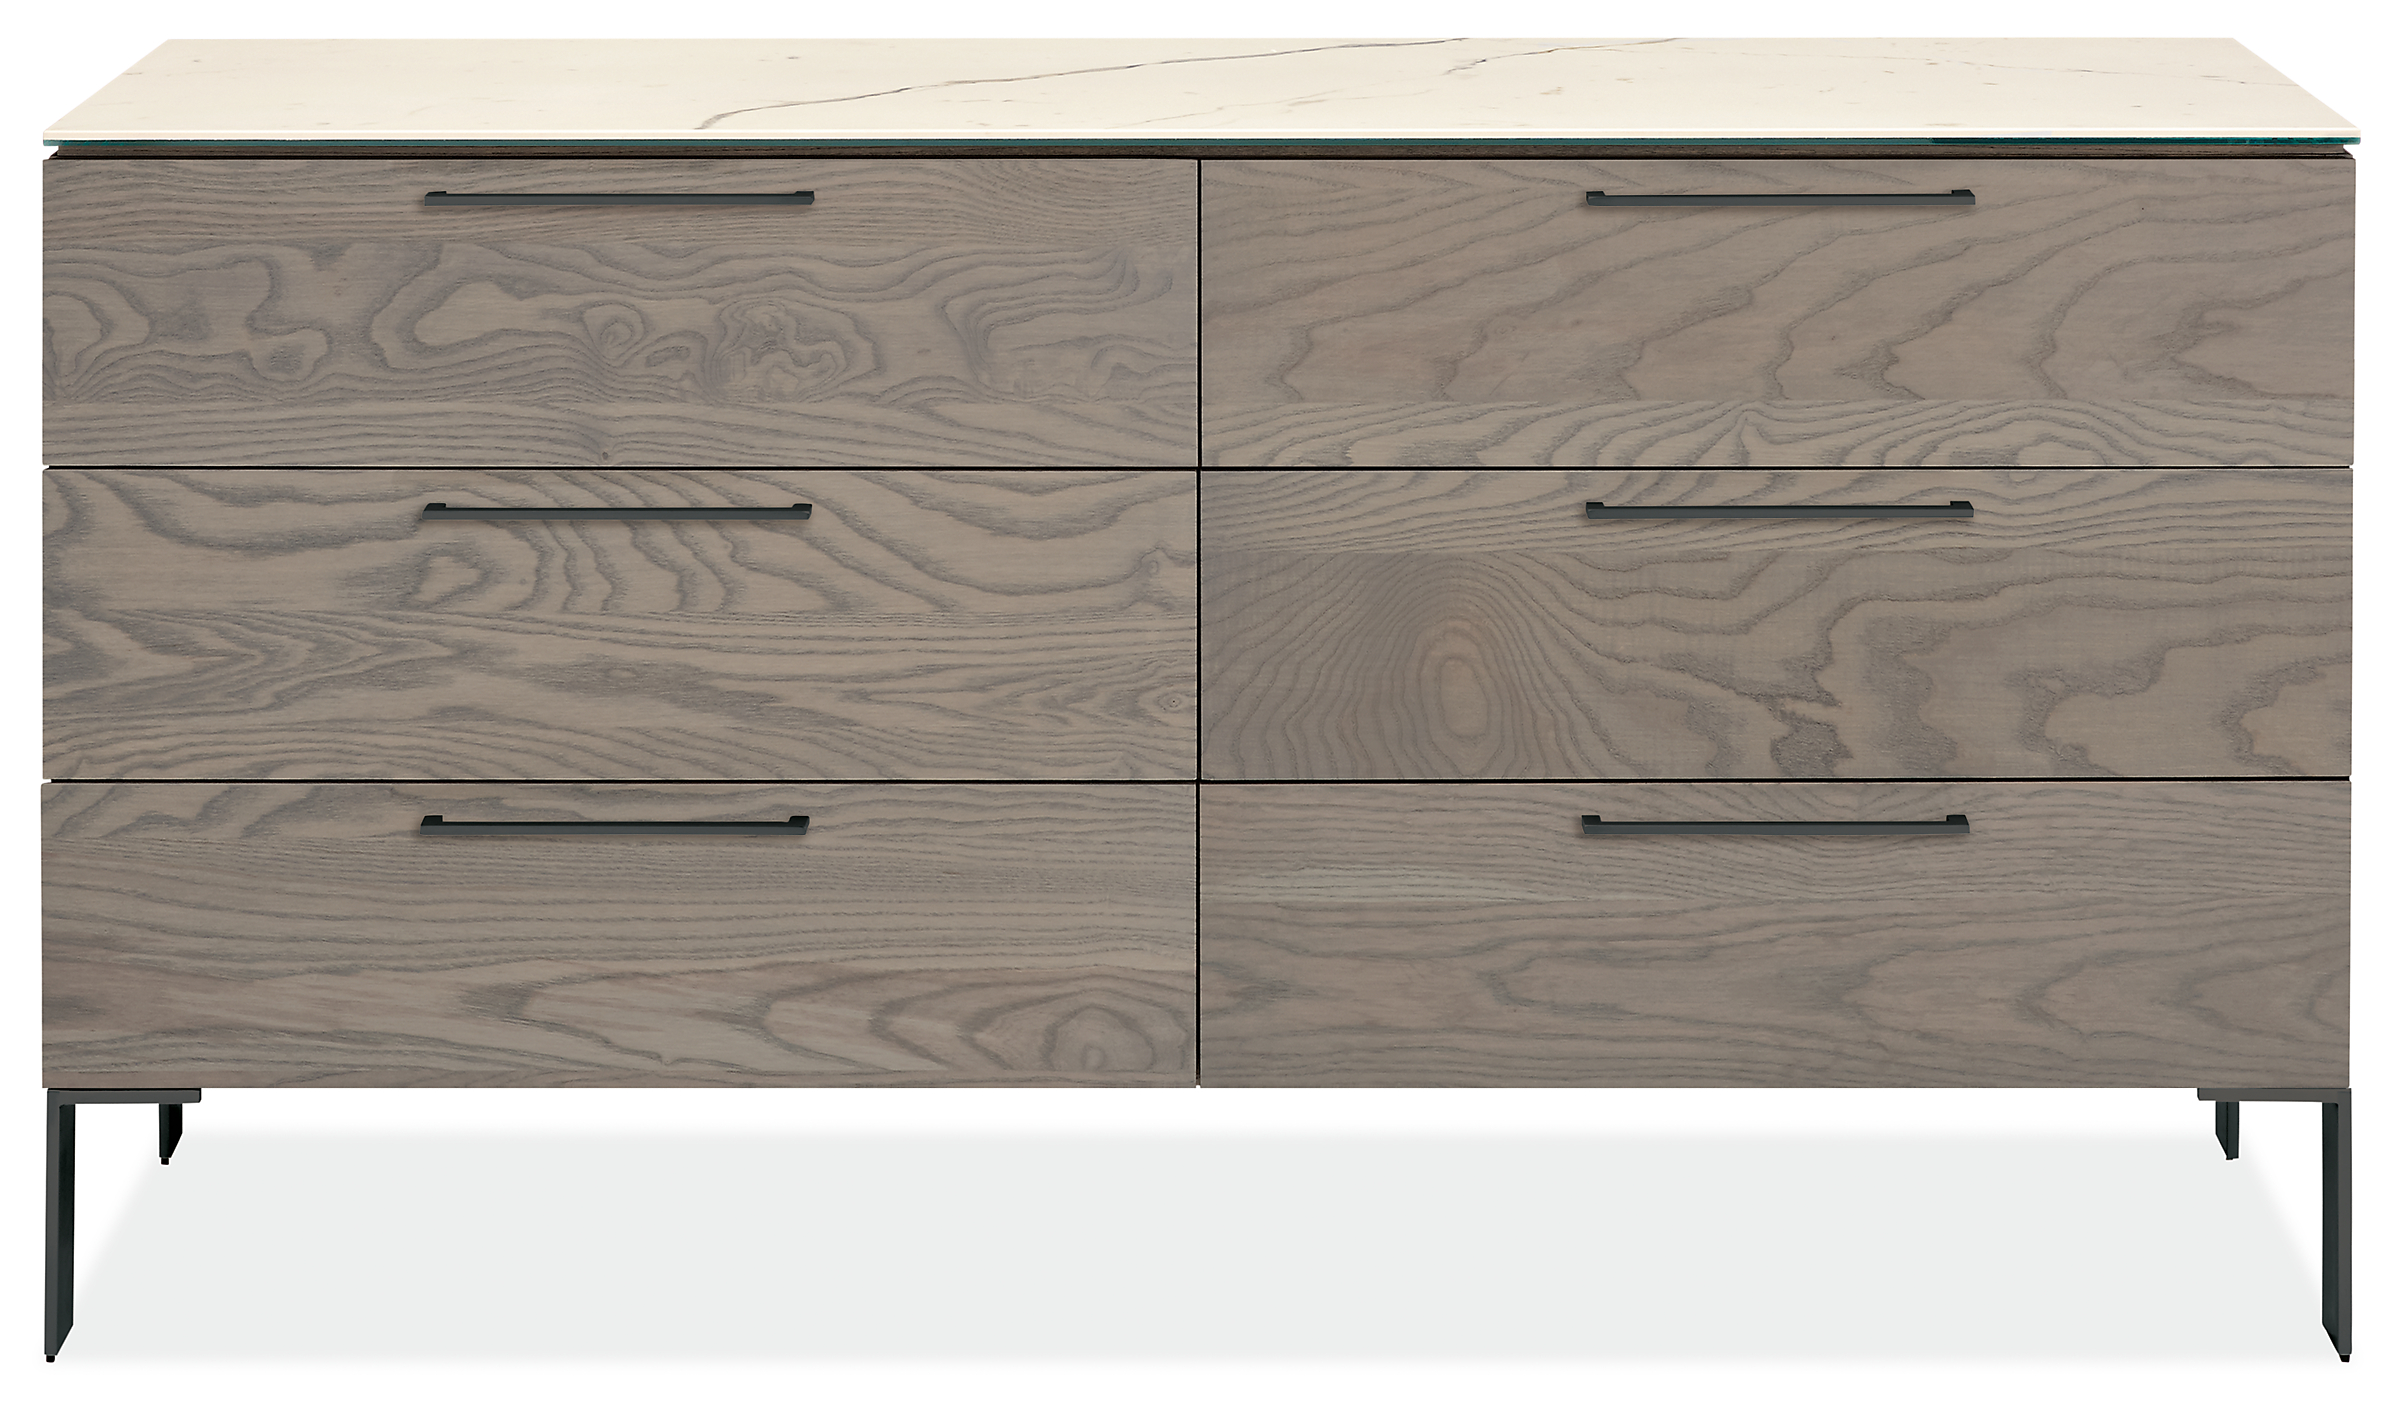 Kenwood 60w 20d 33h Six-Drawer Dresser with Ceramic Top